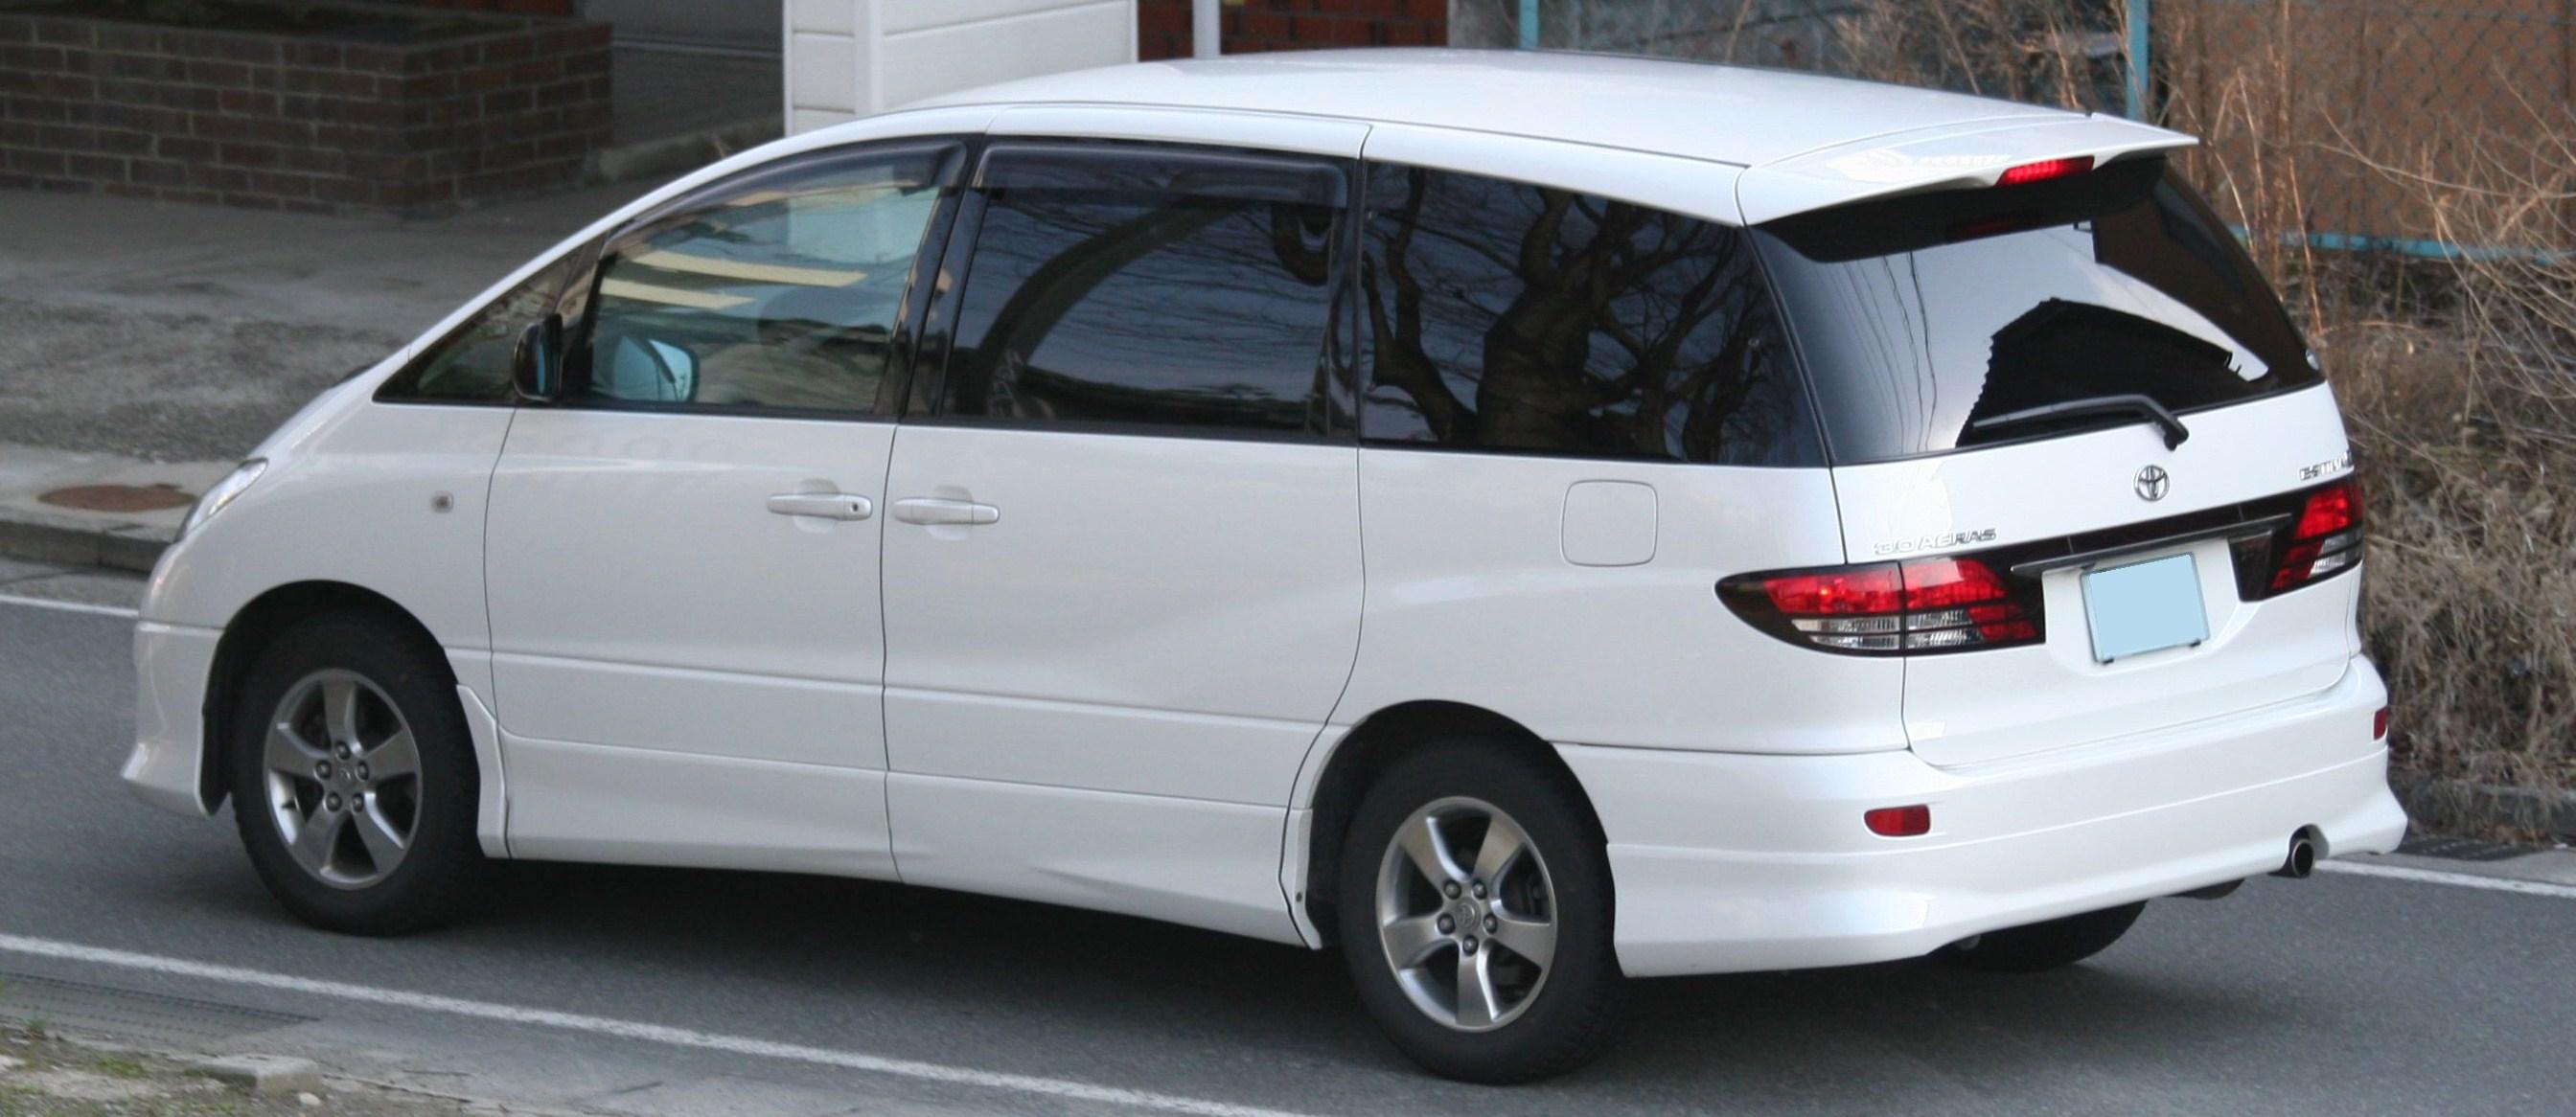 Toyota Estima 2005 photo - 1